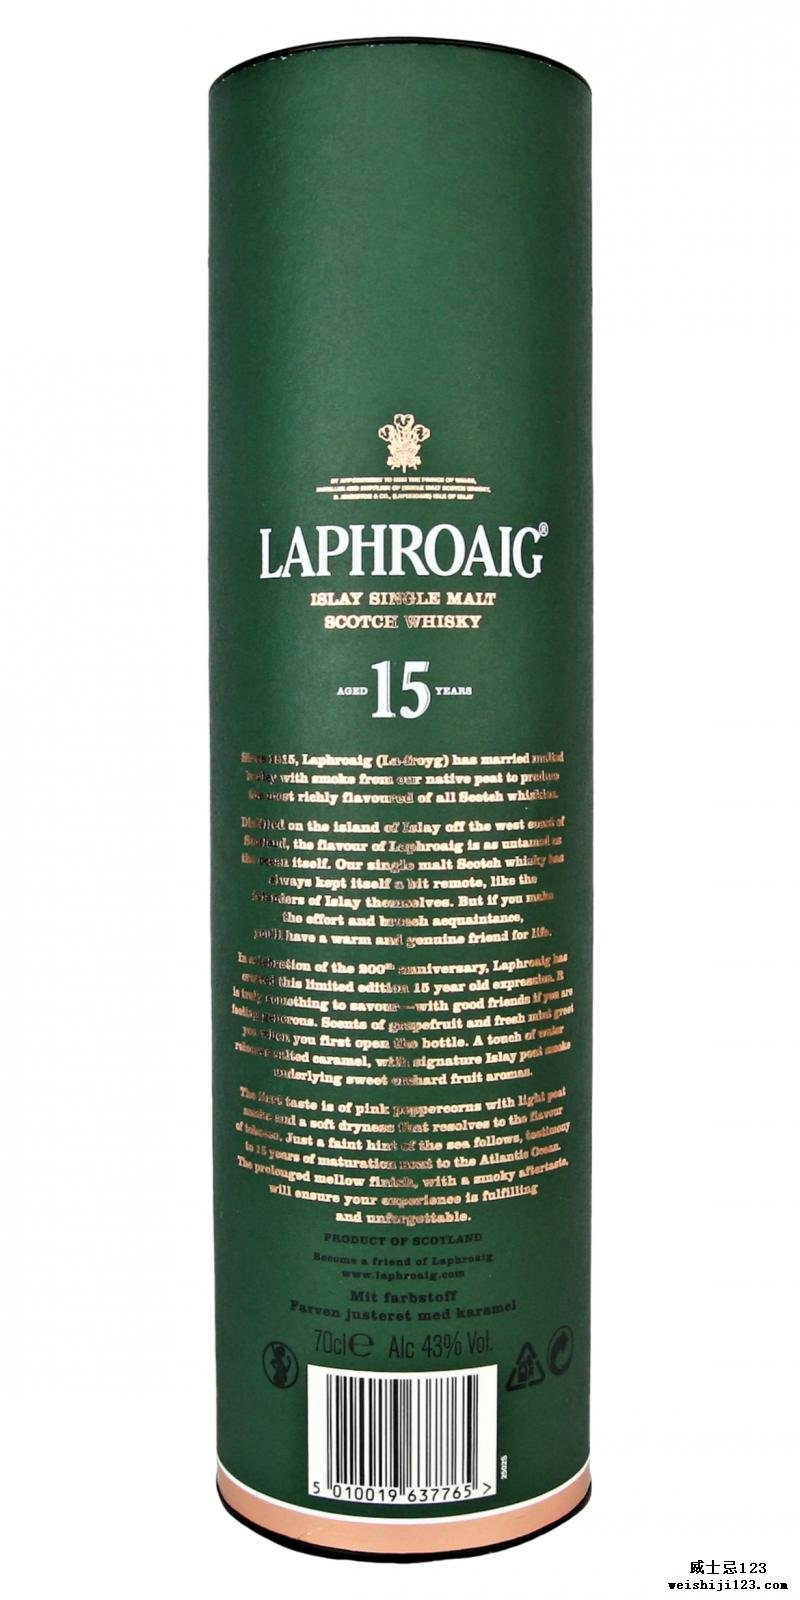 Laphroaig 15-year-old